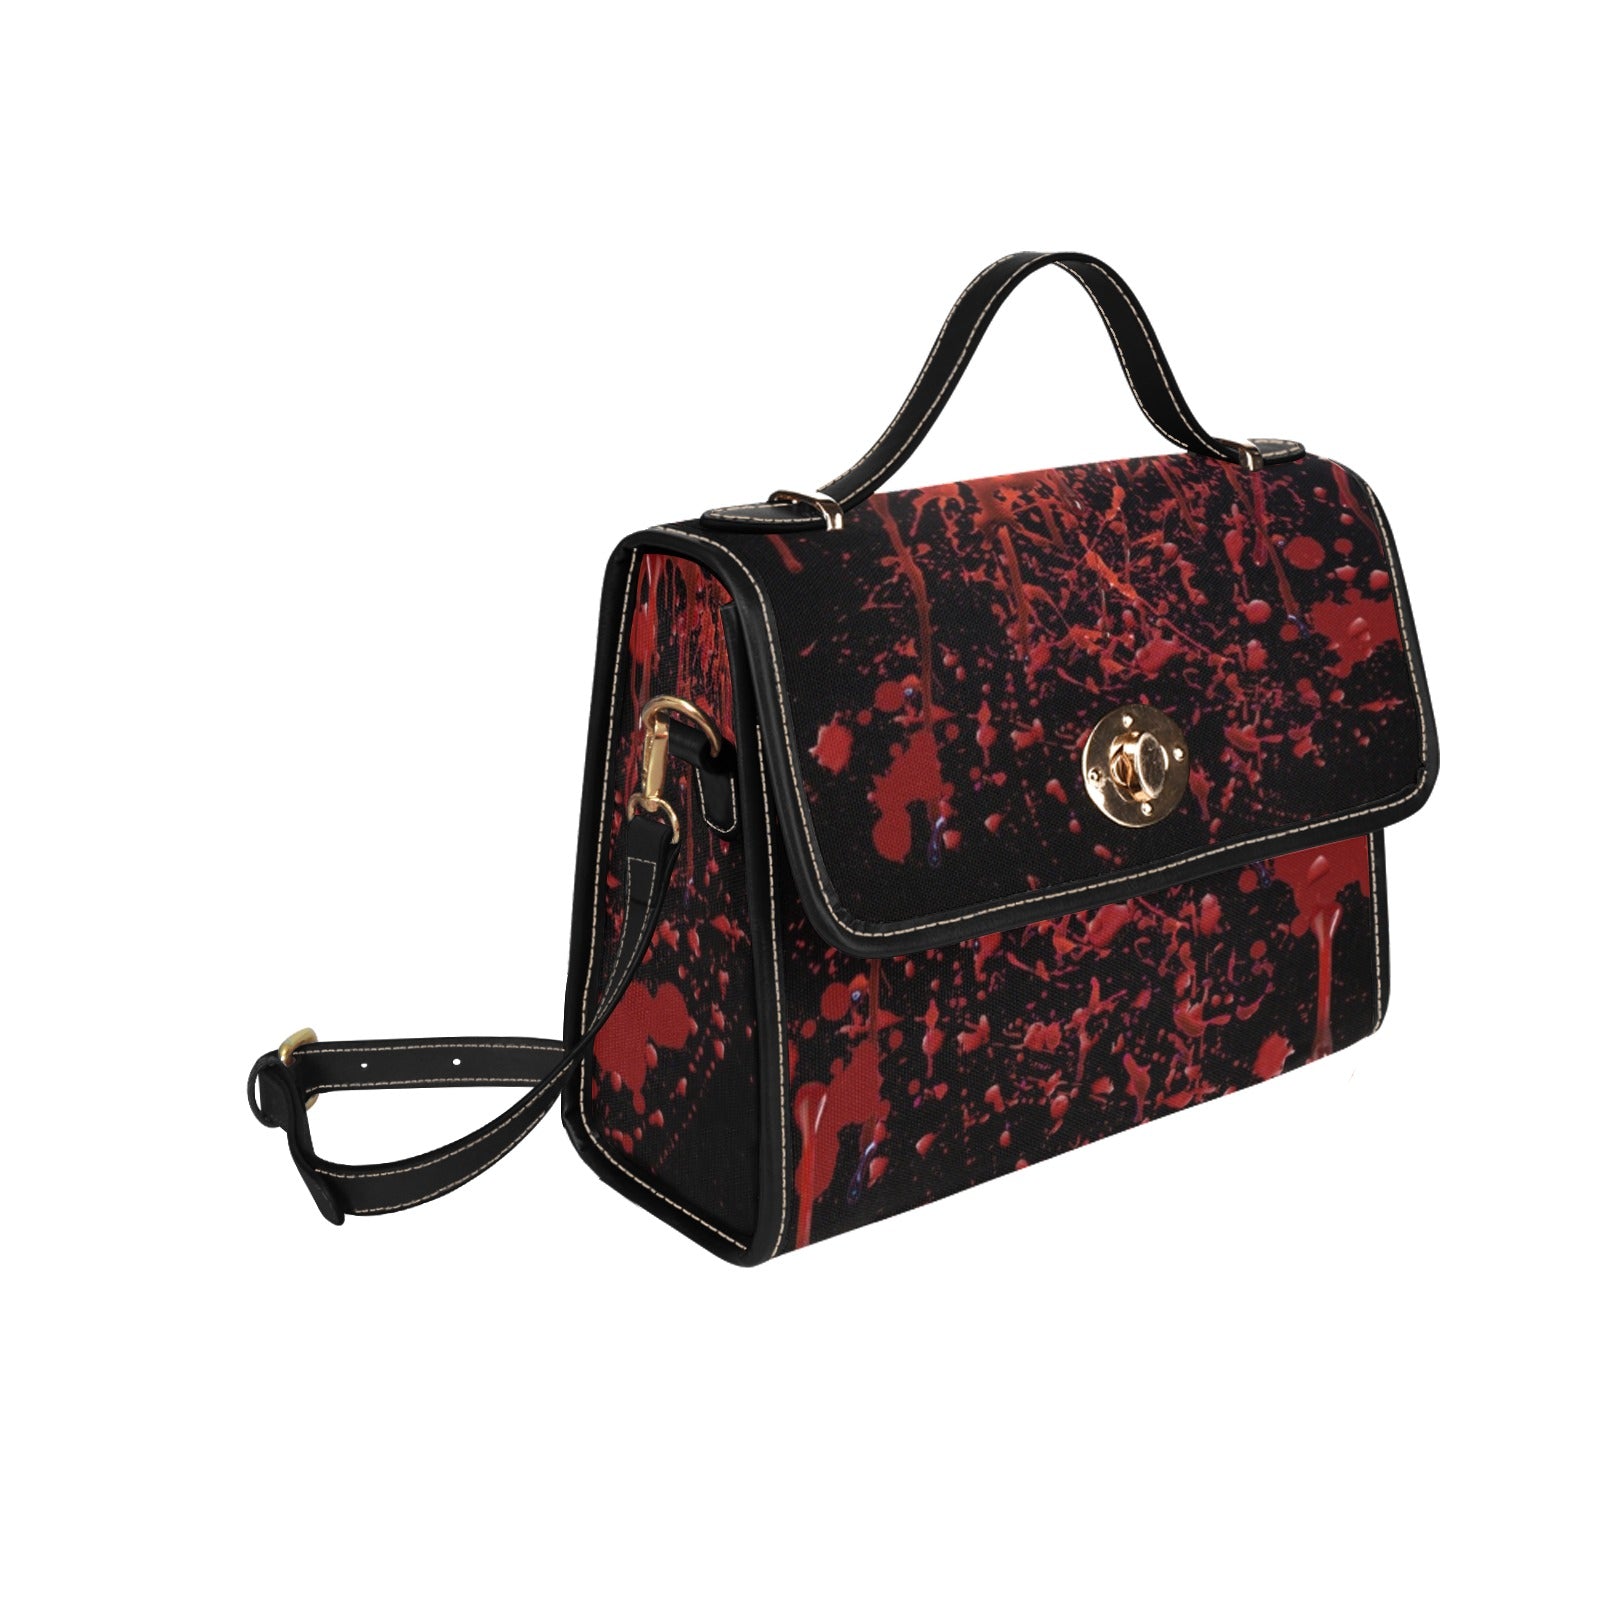 Blood - Waterproof Canvas Handbag